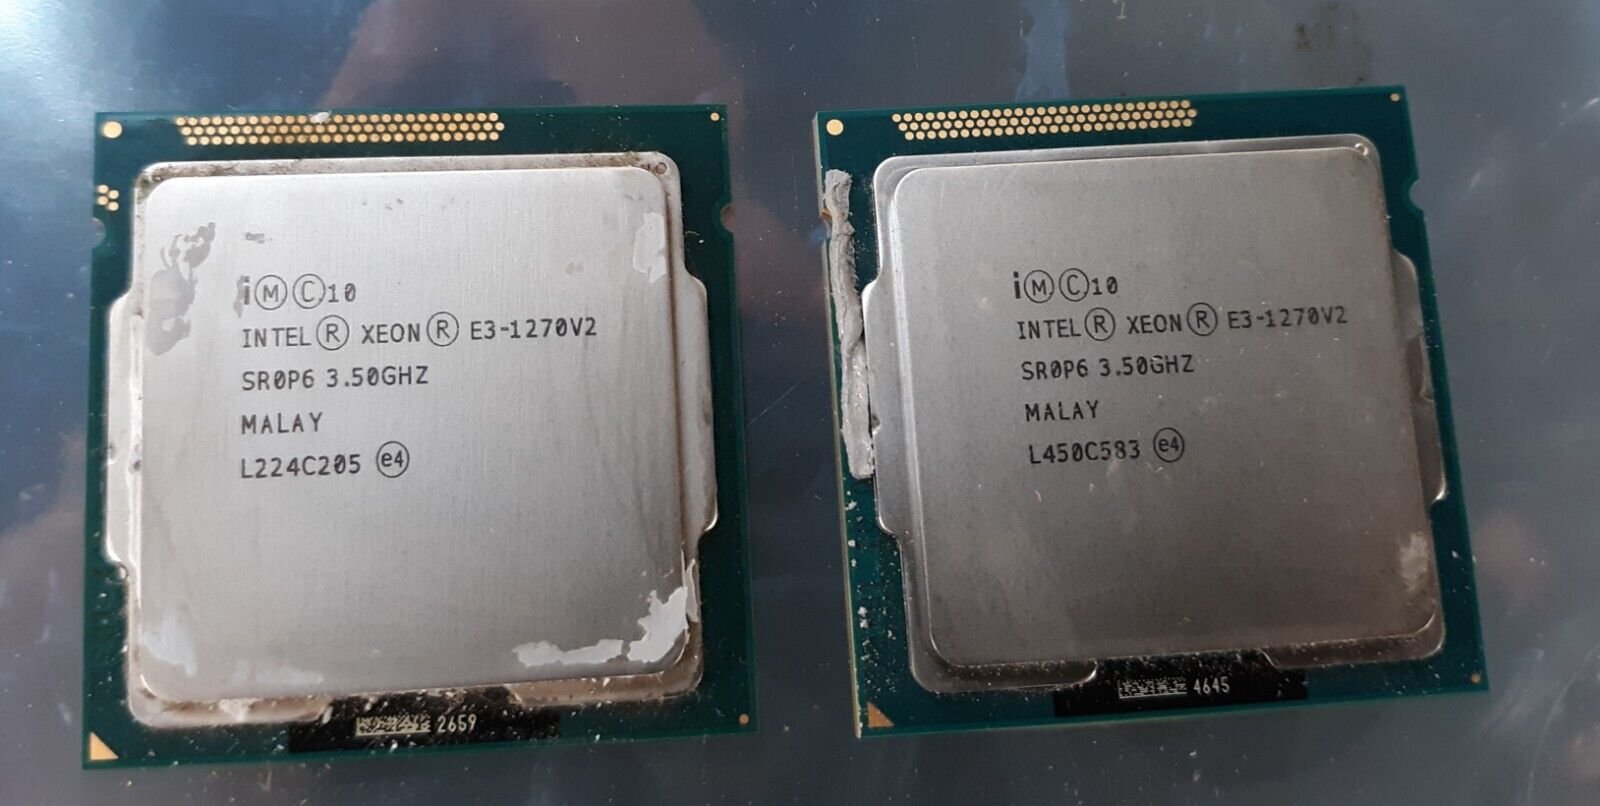 Pair of Intel Xeon E3-1270 V2 SR0P6 3.50GHz CPU Processor